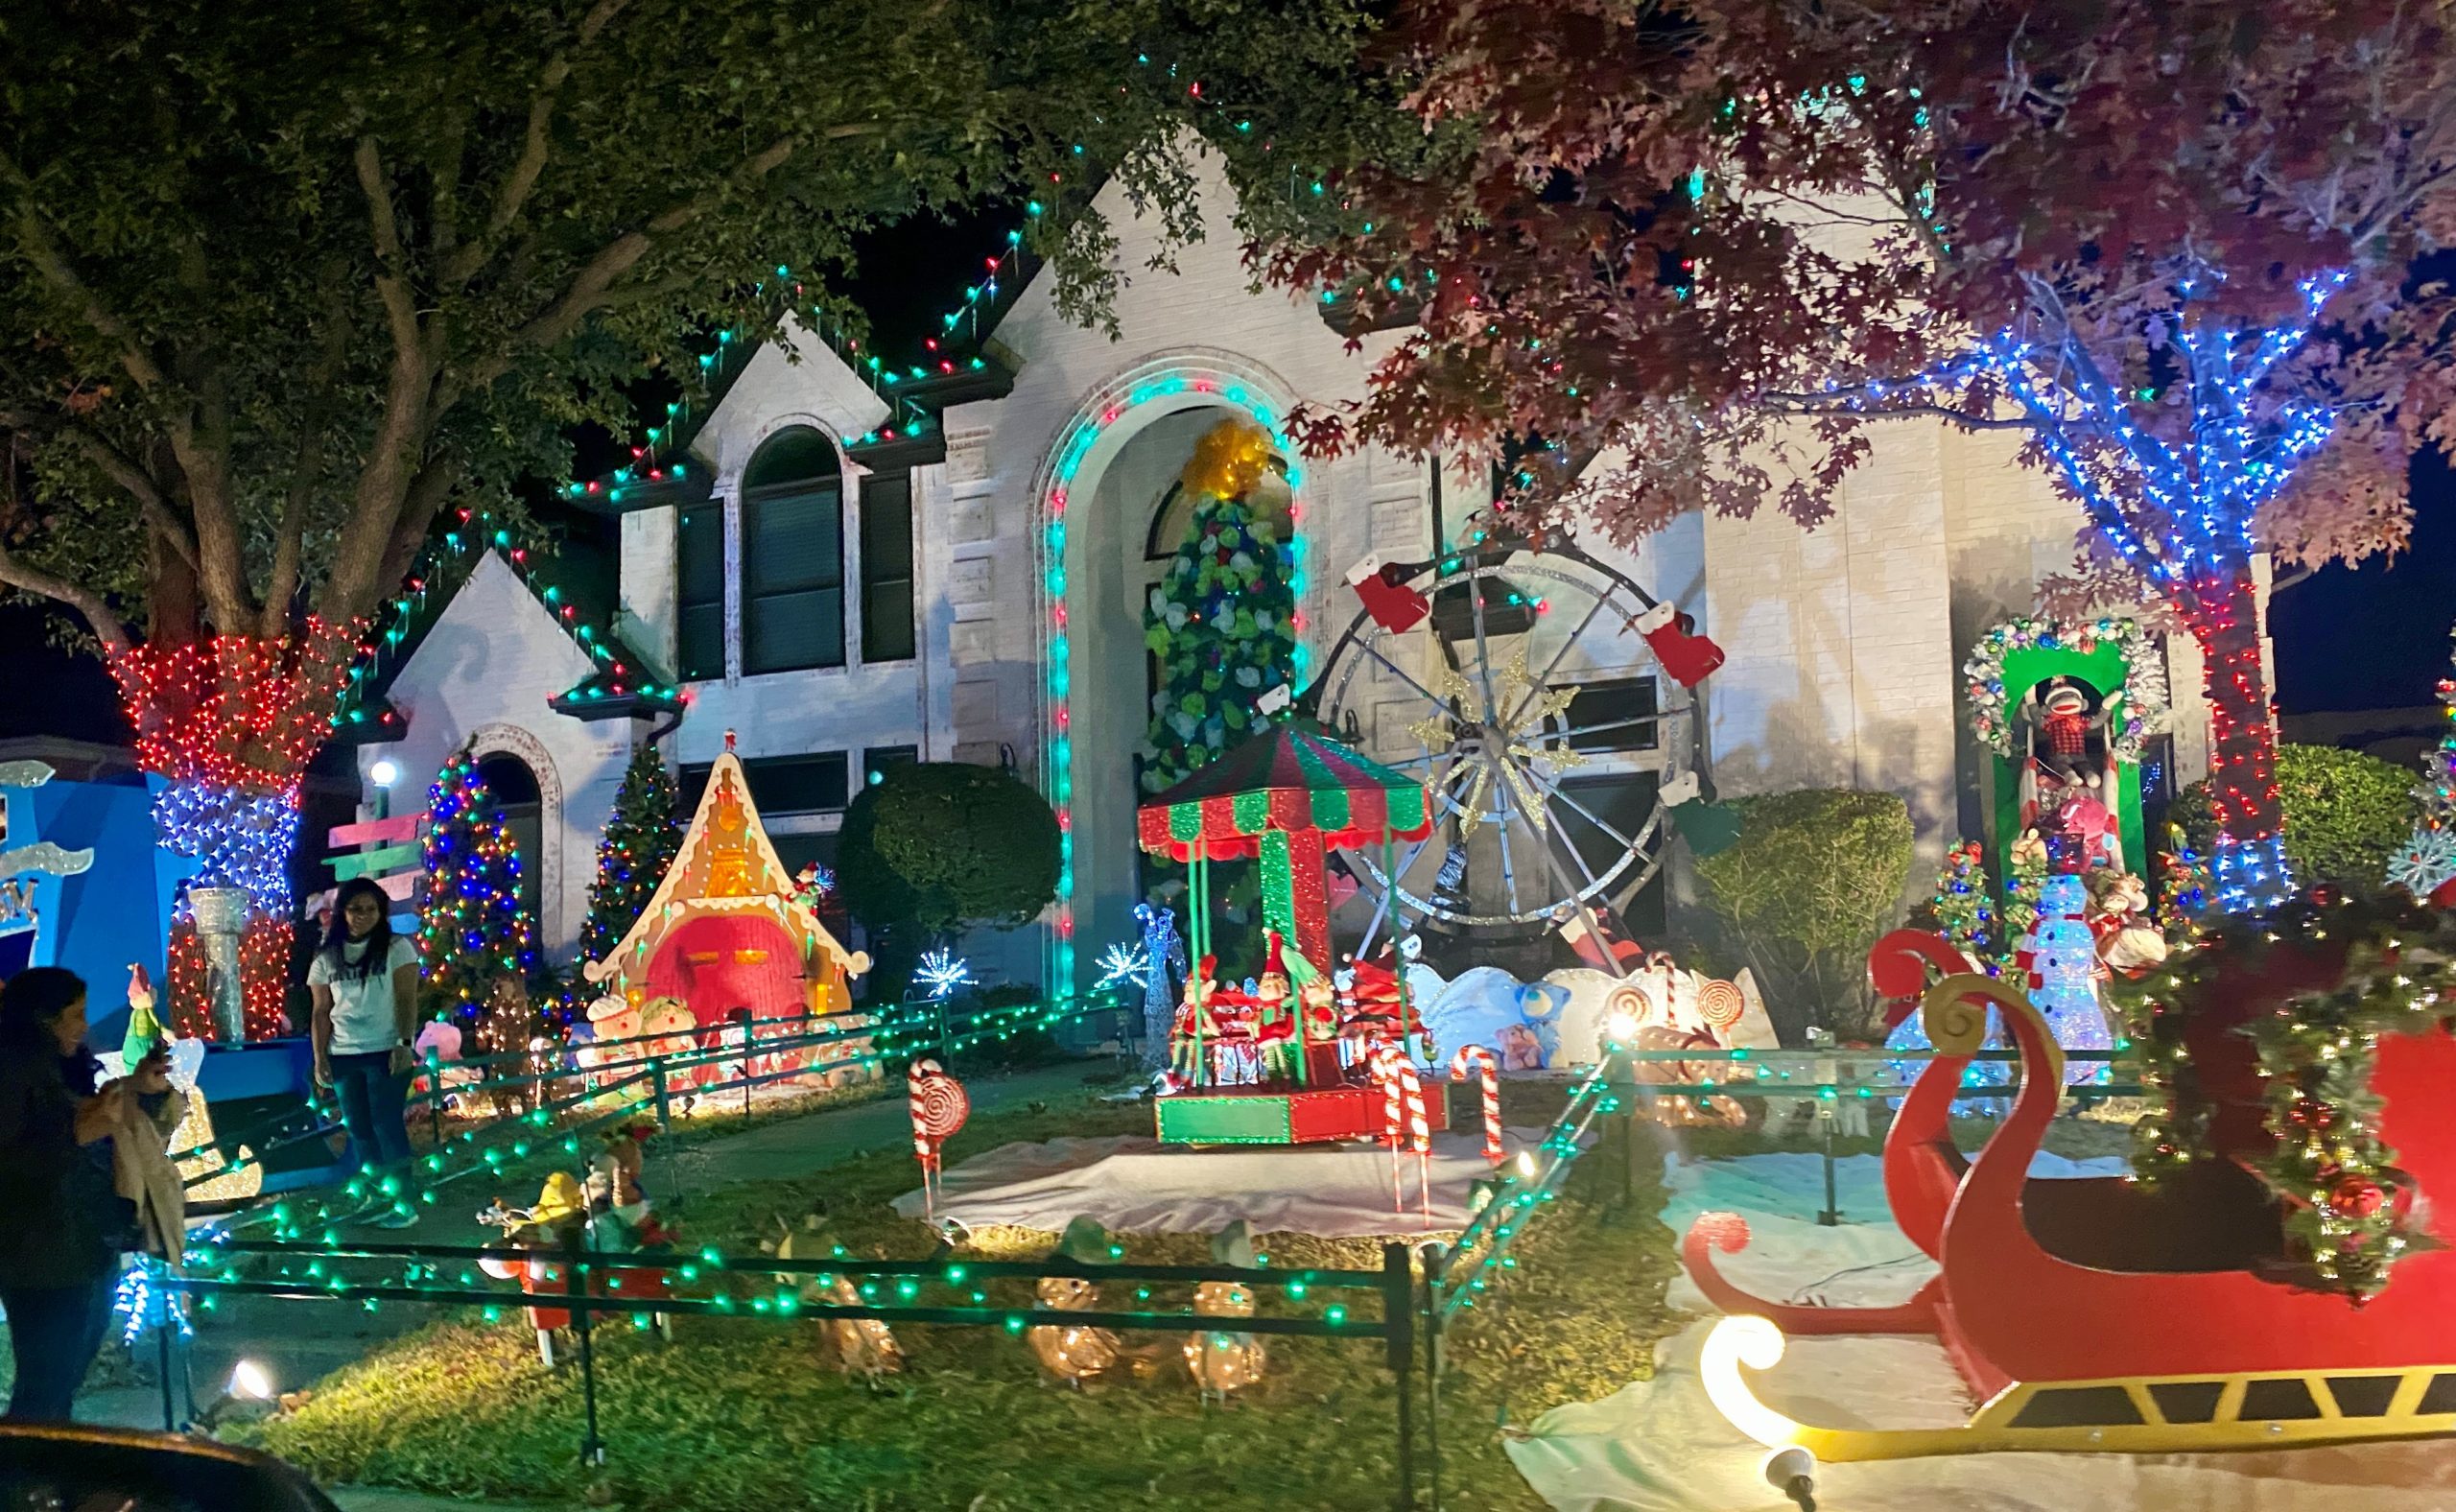 House holiday light display in Deerfield community